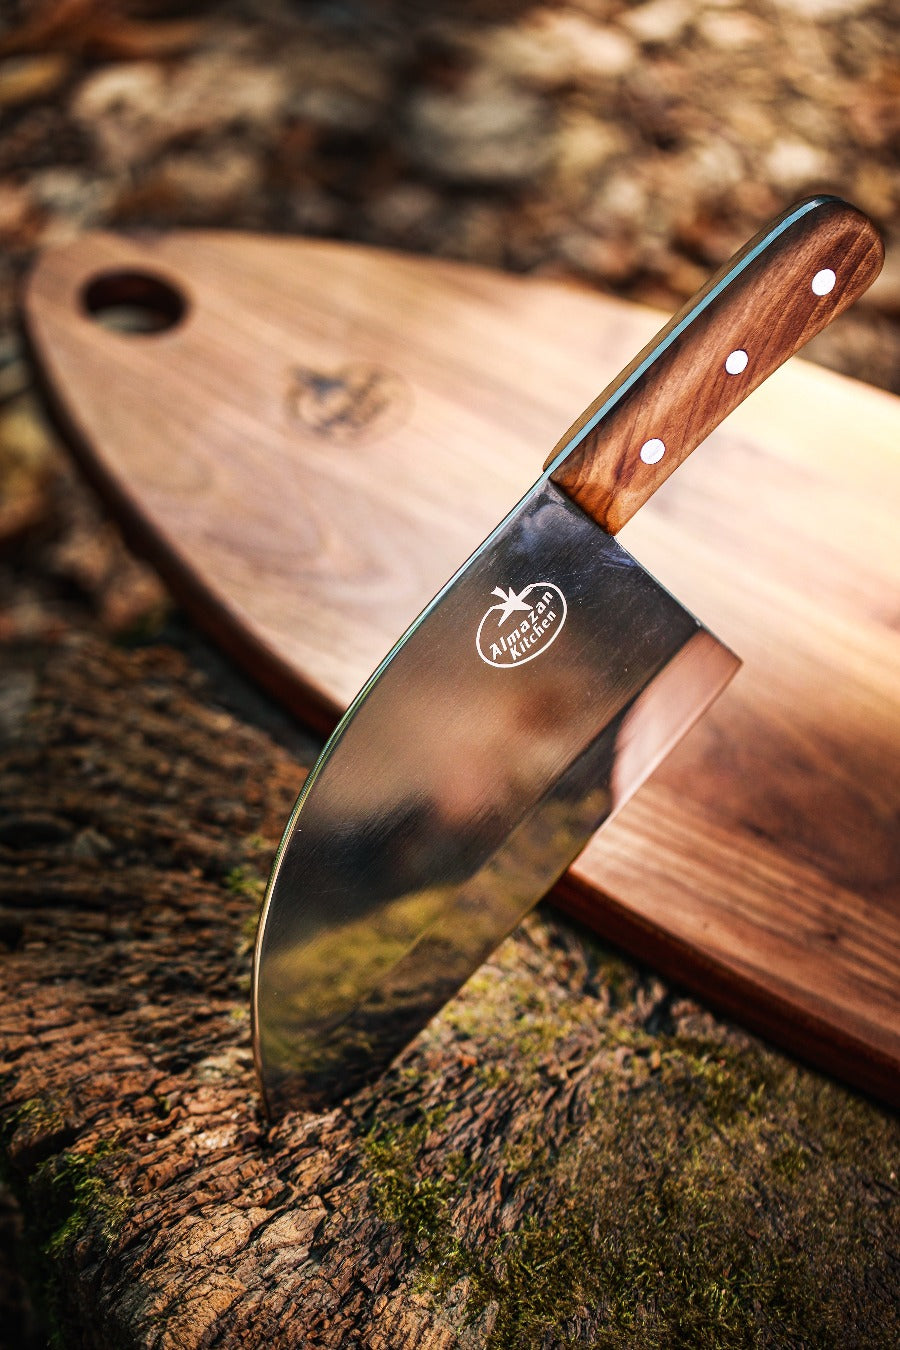 Almazan Kitchen Promaja Knife lodged into a tree trunk with a cutting board behind it.